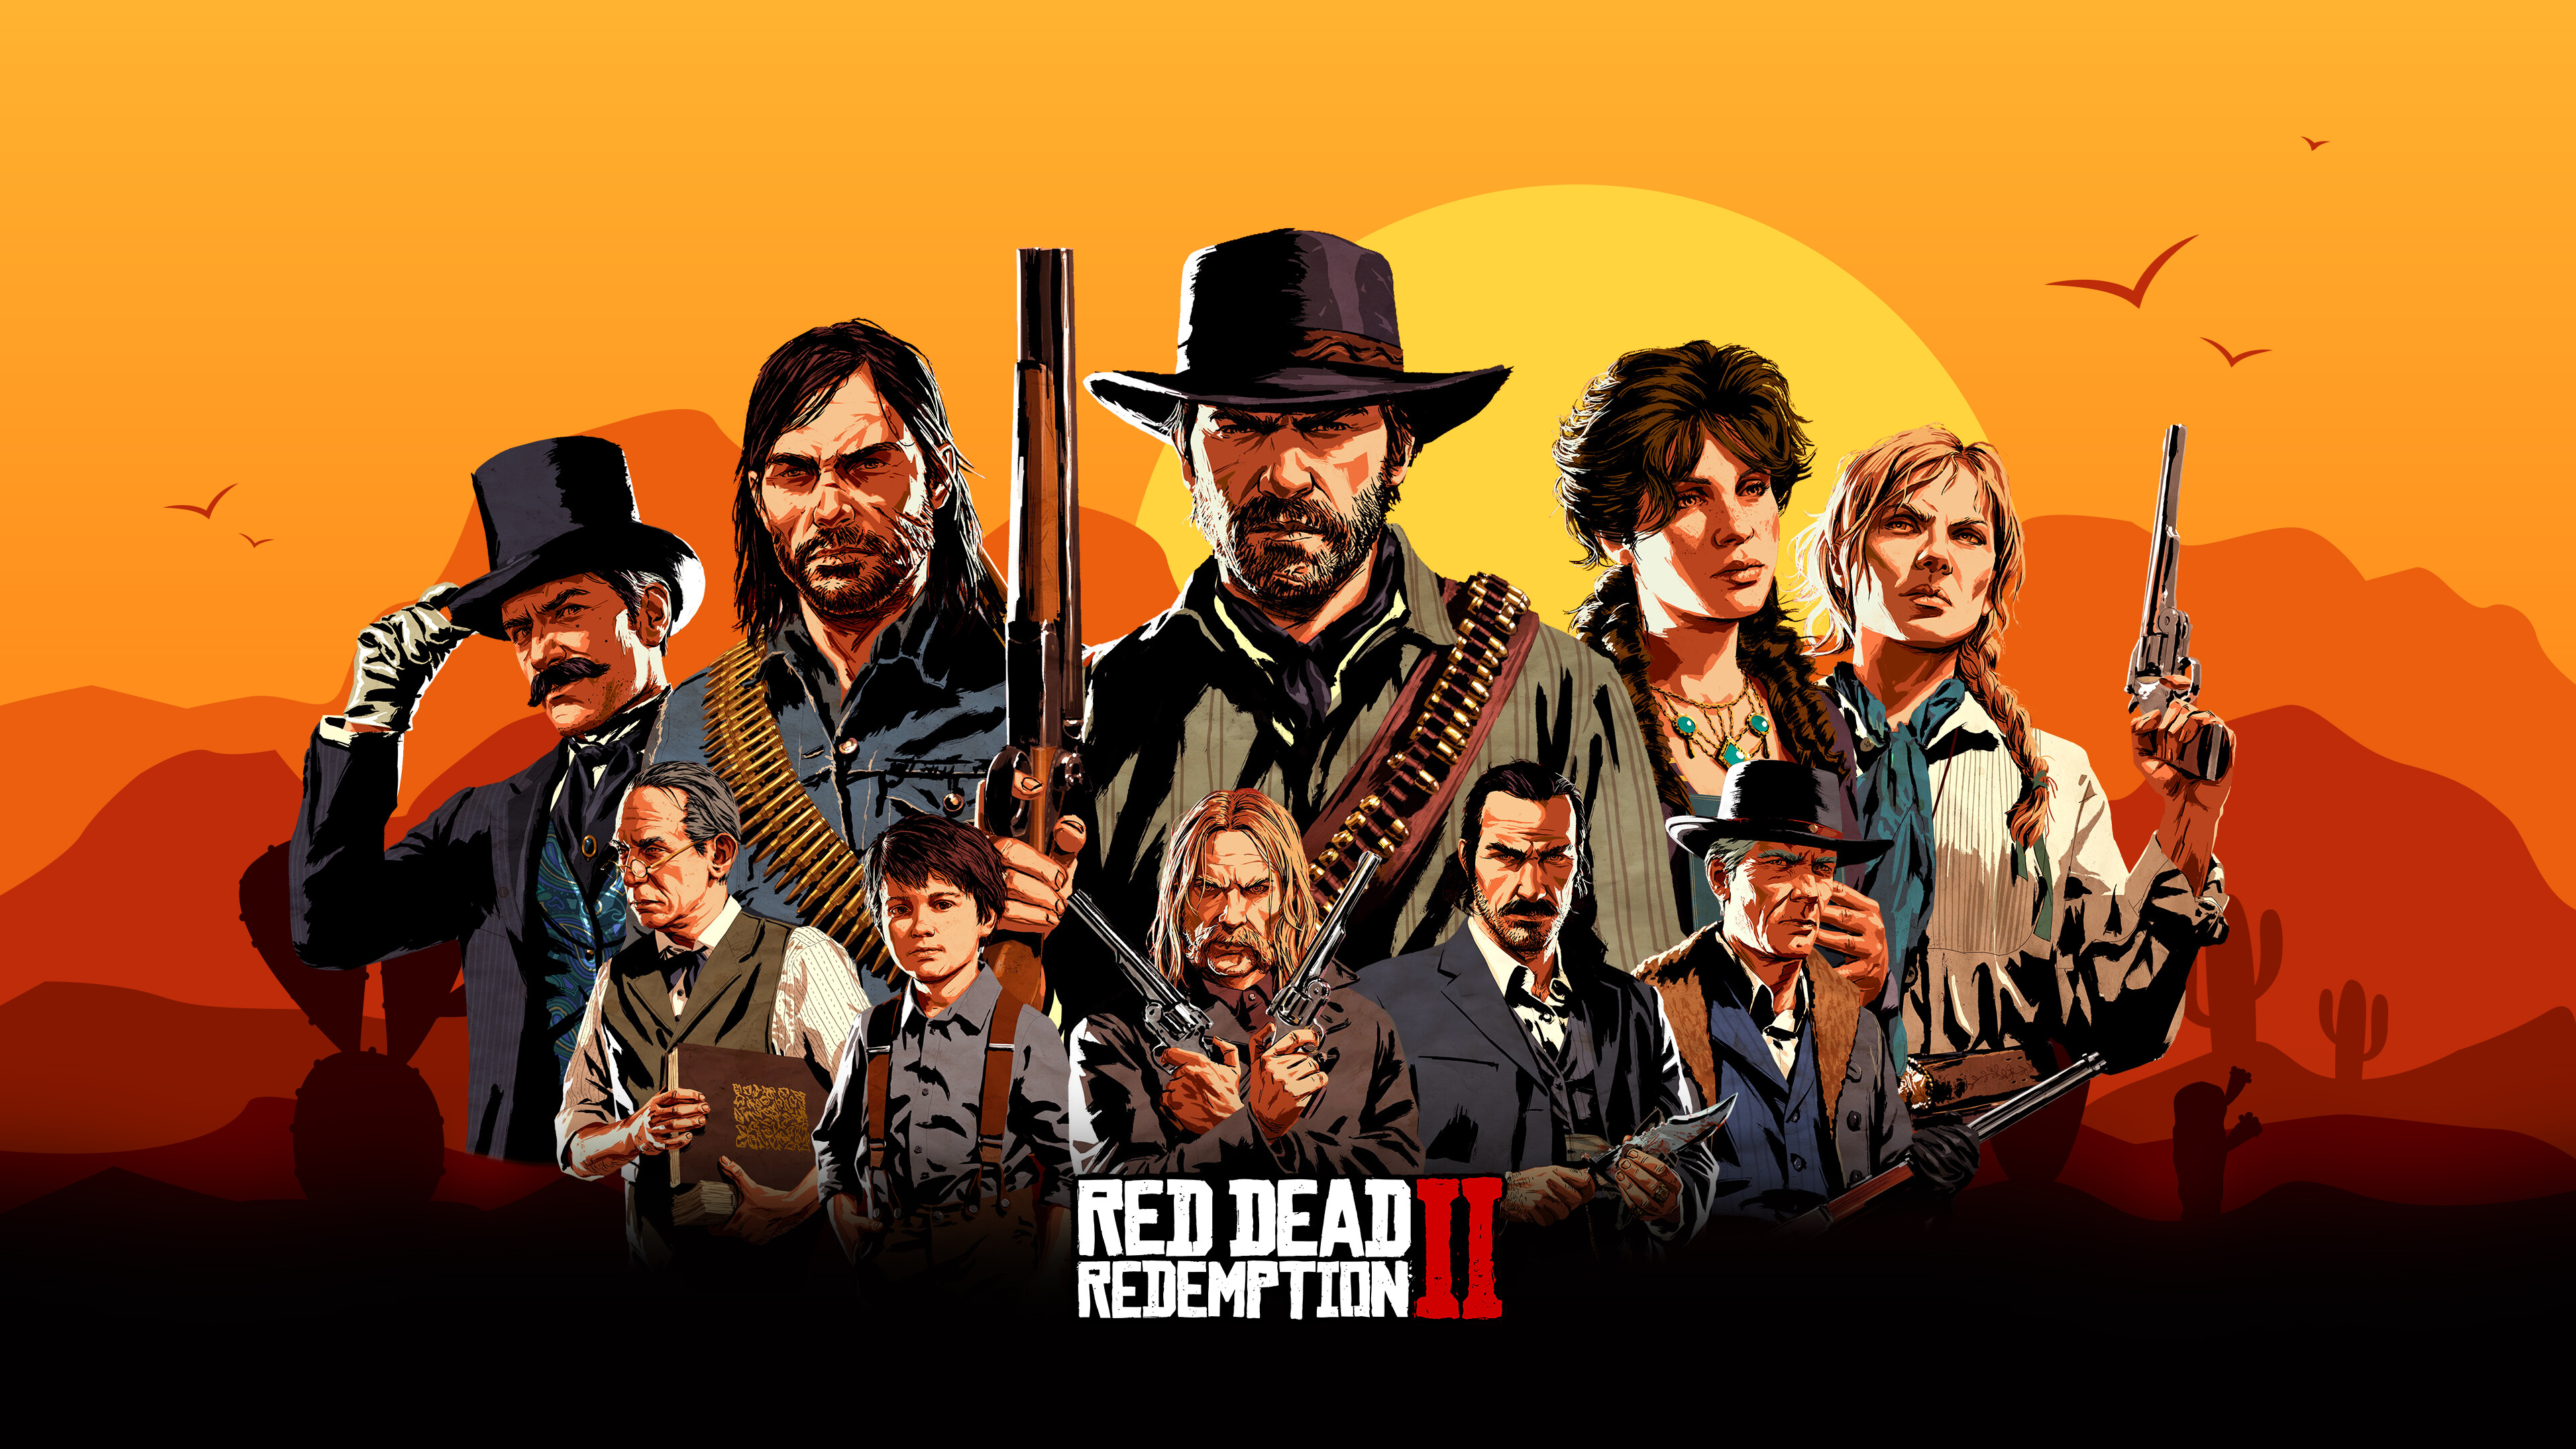 Red Dead Redemption: Arthur Morgan, Micah Bell, Dutch van der Linde, John Marston, and Sadie Adle. 3840x2160 4K Wallpaper.